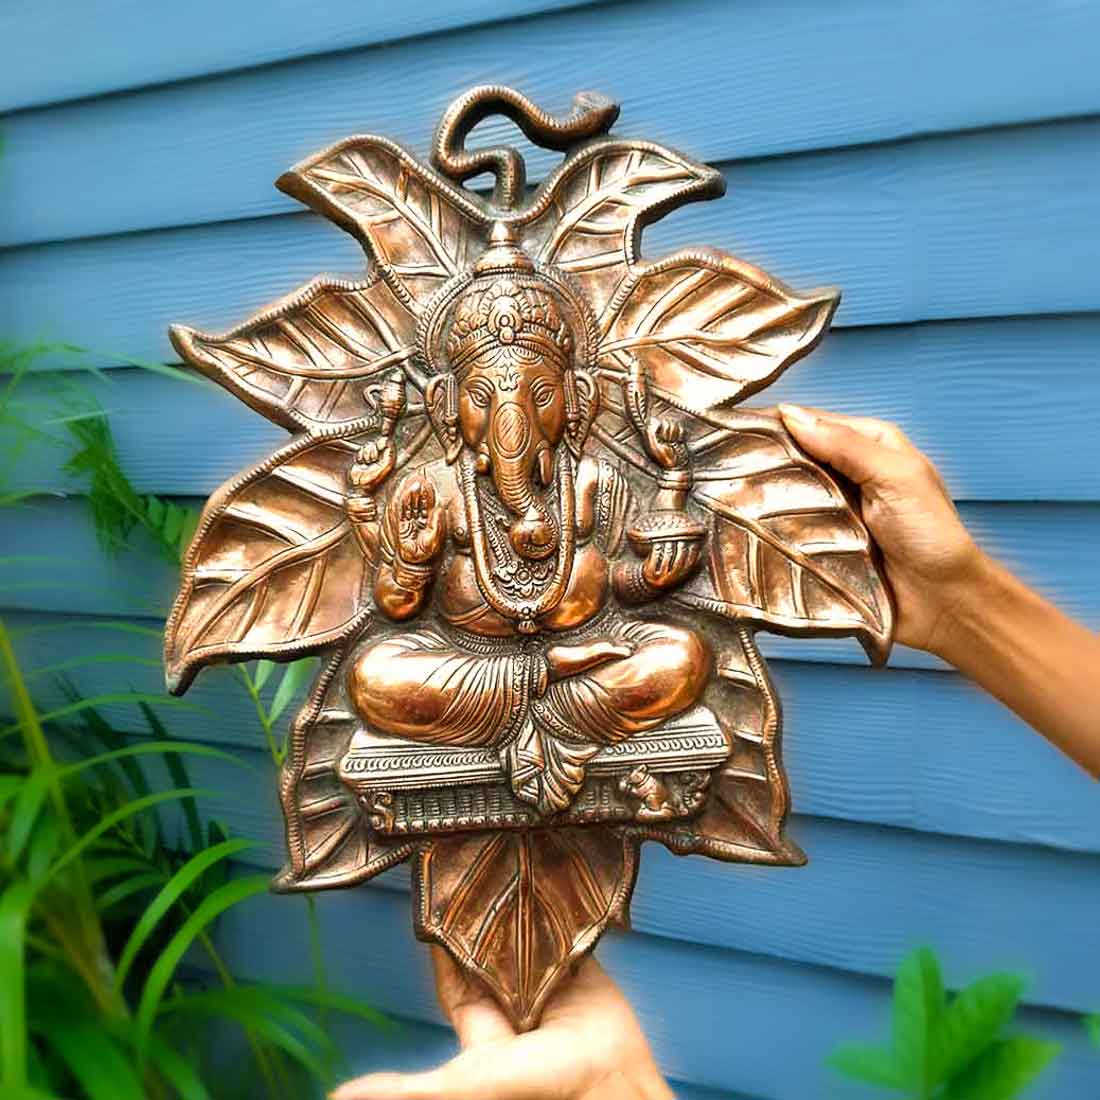 Ganesh Wall Hanging Idol Big | Lord Ganesha Statue Wall With Leaf Design Art - For Puja, Home & Main Gate |Religoius & Spiritual Decor for Living Room - 18  Inch